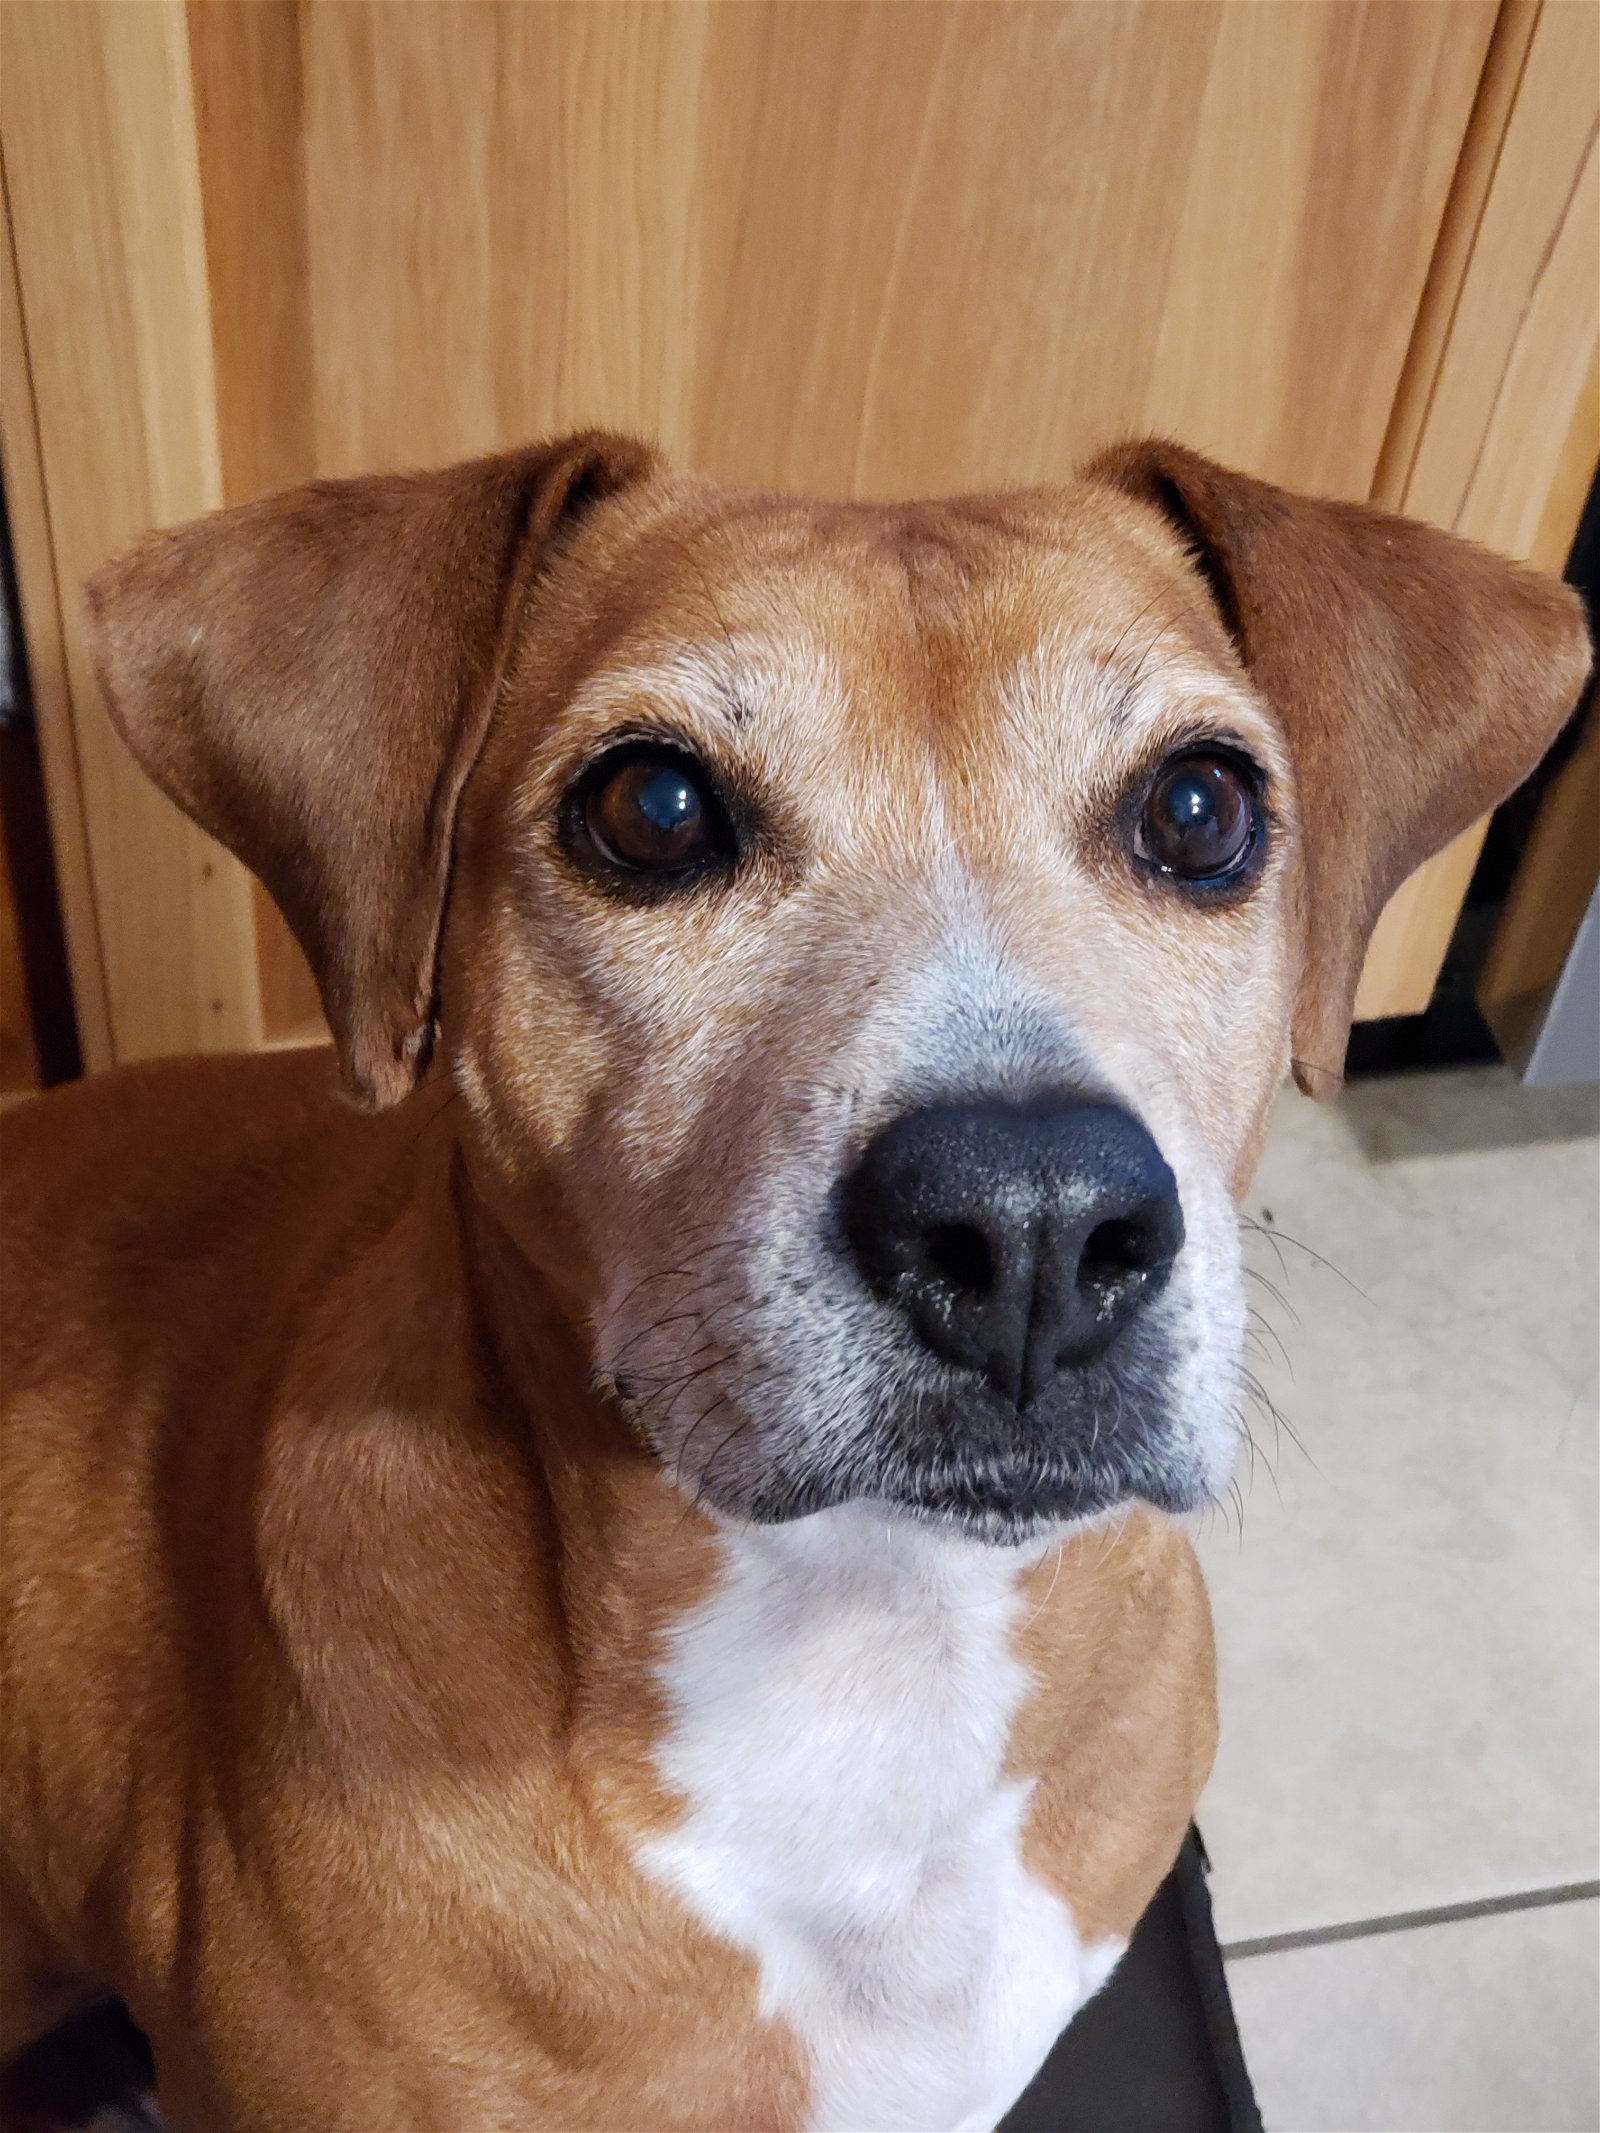 Delight - 0$ adoption fee, an adoptable Beagle in Bloomington, IL, 61701 | Photo Image 1